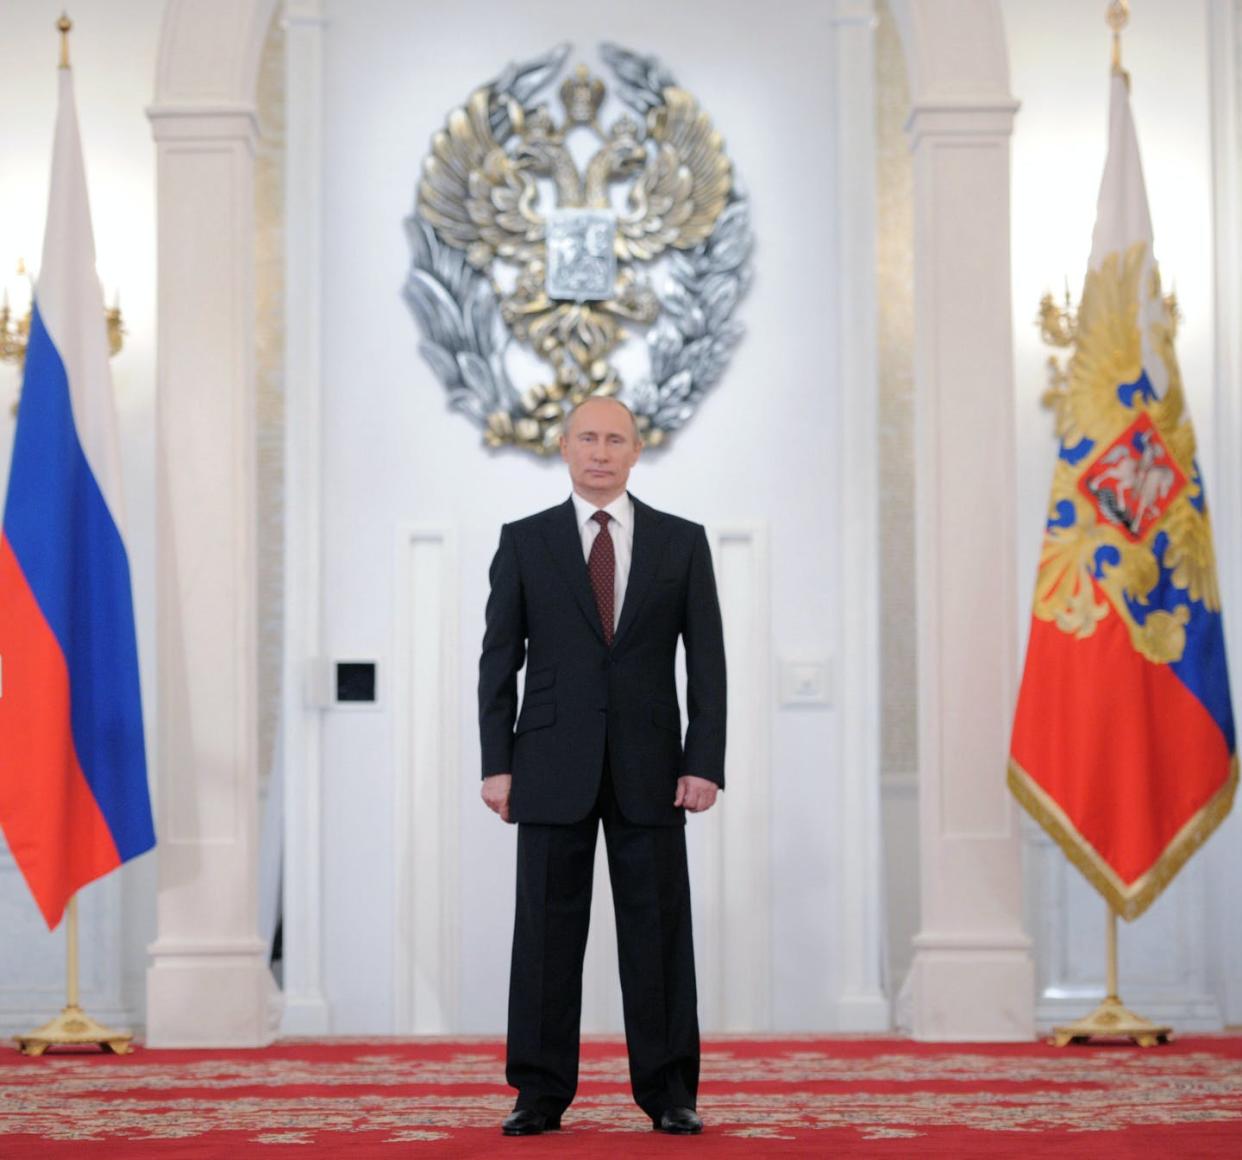 <span class="caption">Russian President <span class="caas-xray-inline-tooltip"><span class="caas-xray-inline caas-xray-entity caas-xray-pill rapid-nonanchor-lt" data-entity-id="Vladimir_Putin" data-ylk="cid:Vladimir_Putin;pos:1;elmt:wiki;sec:pill-inline-entity;elm:pill-inline-text;itc:1;cat:OfficeHolder;" tabindex="0" aria-haspopup="dialog"><a href="https://search.yahoo.com/search?p=Vladimir%20Putin" data-i13n="cid:Vladimir_Putin;pos:1;elmt:wiki;sec:pill-inline-entity;elm:pill-inline-text;itc:1;cat:OfficeHolder;" tabindex="-1" data-ylk="slk:Vladimir Putin;cid:Vladimir_Putin;pos:1;elmt:wiki;sec:pill-inline-entity;elm:pill-inline-text;itc:1;cat:OfficeHolder;" class="link ">Vladimir Putin</a></span></span> stands alone.</span> <span class="attribution"><a class="link " href="https://www.gettyimages.com/detail/news-photo/russias-president-vladimir-putin-stands-at-georgiyevsky-news-photo/146204667" rel="nofollow noopener" target="_blank" data-ylk="slk:Alexey Druzhinin/AFP via Getty Images;elm:context_link;itc:0;sec:content-canvas">Alexey Druzhinin/AFP via Getty Images</a></span>